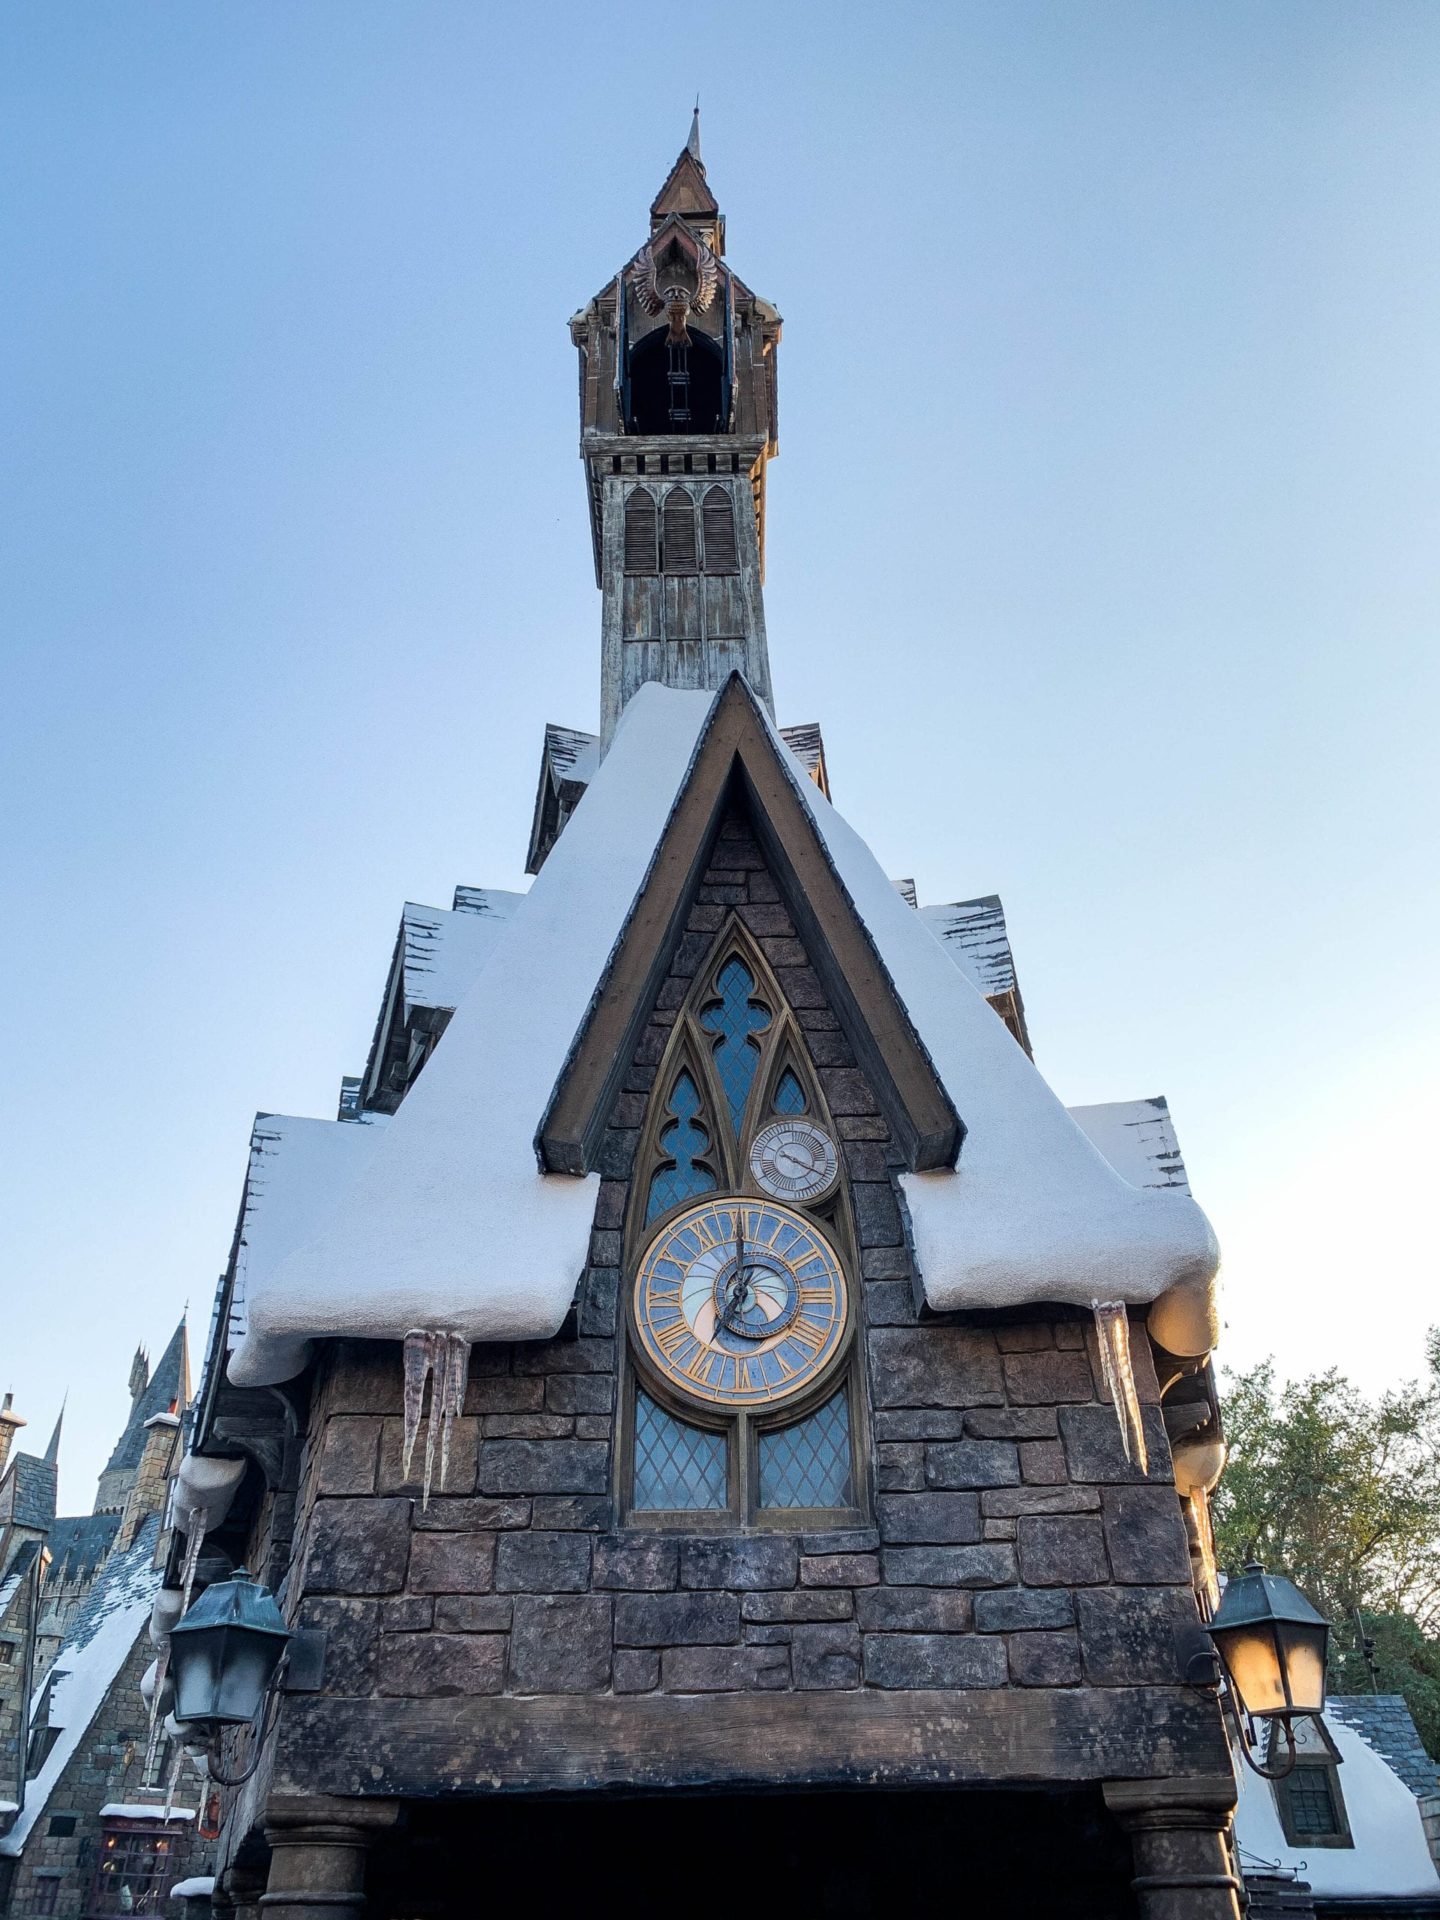 Universal Studios Hogsmeade Village, the Wizarding World of Harry Potter